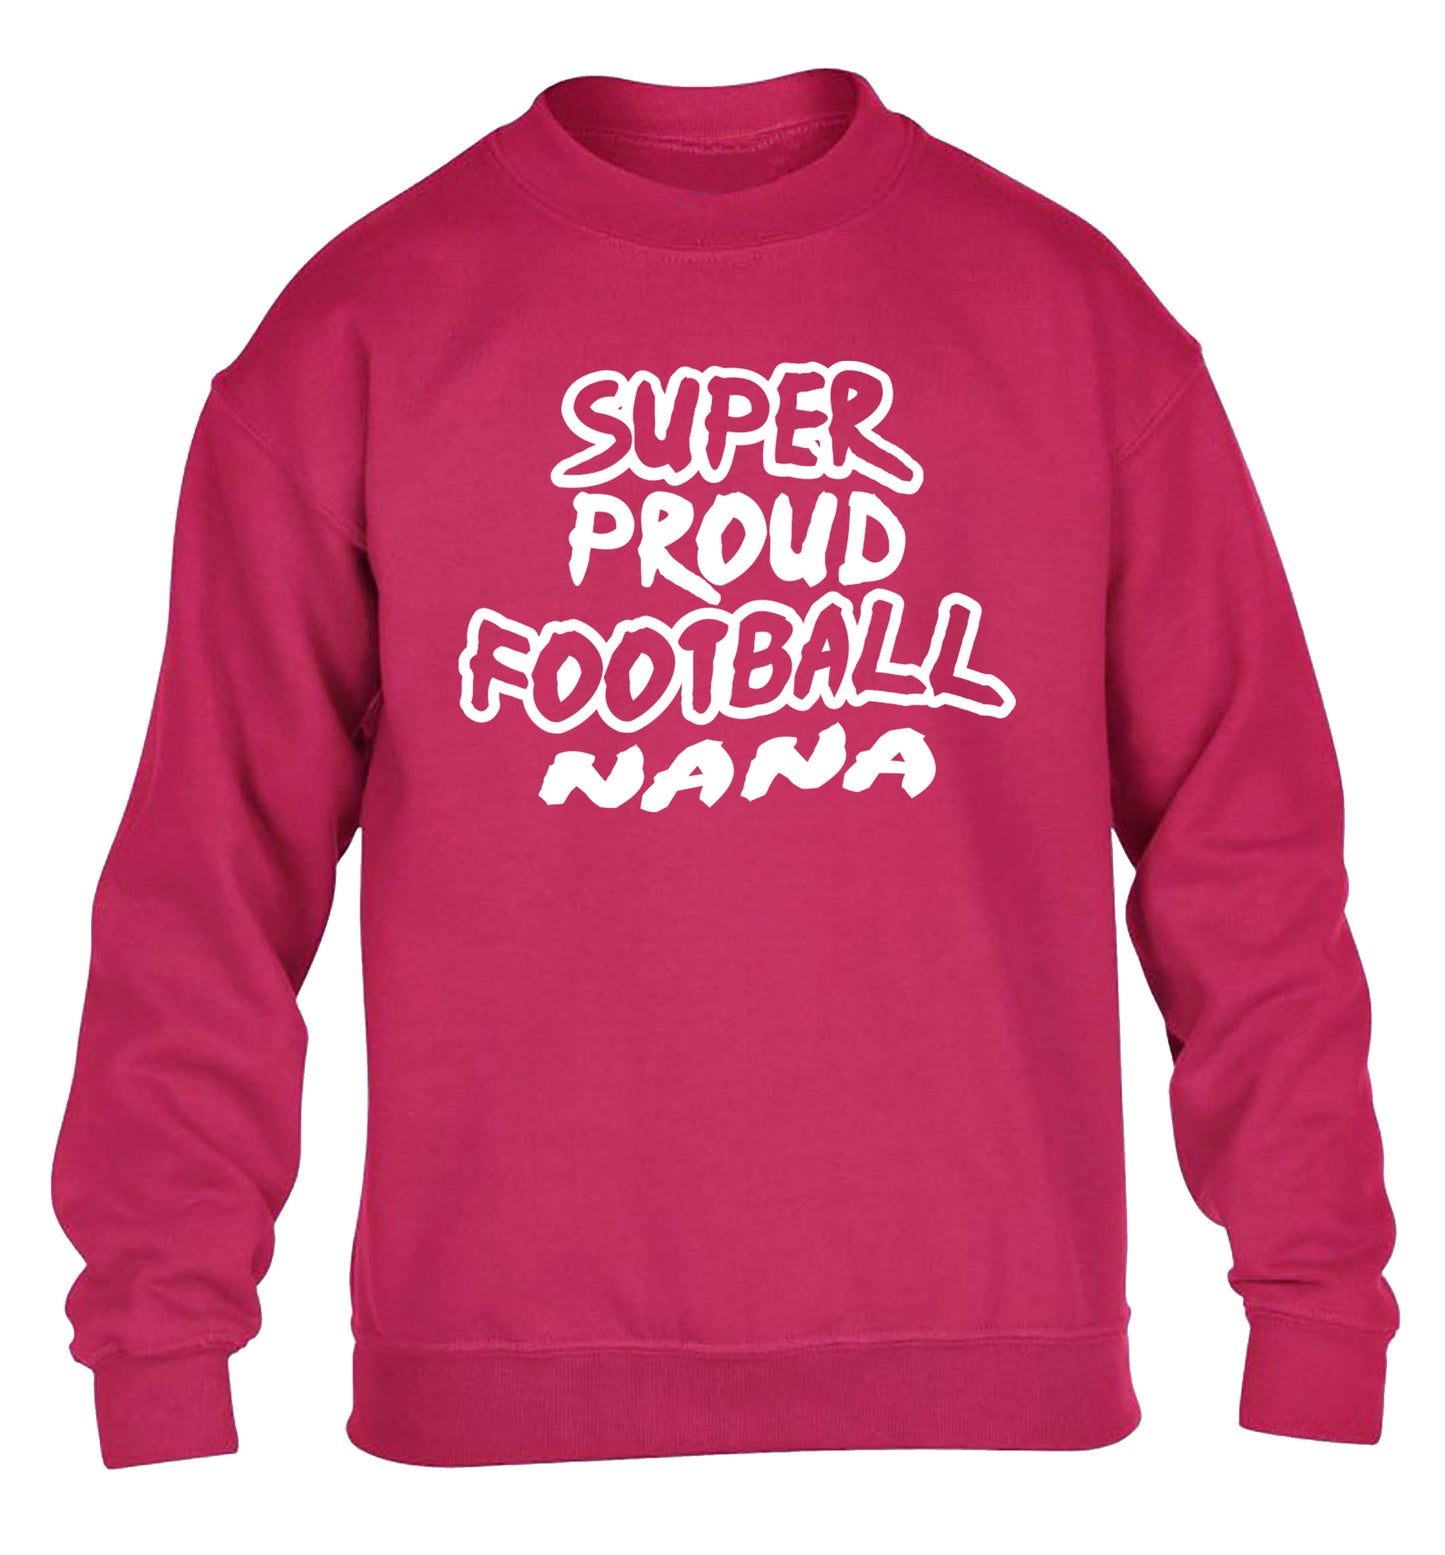 Super proud football nana children's pink sweater 12-14 Years